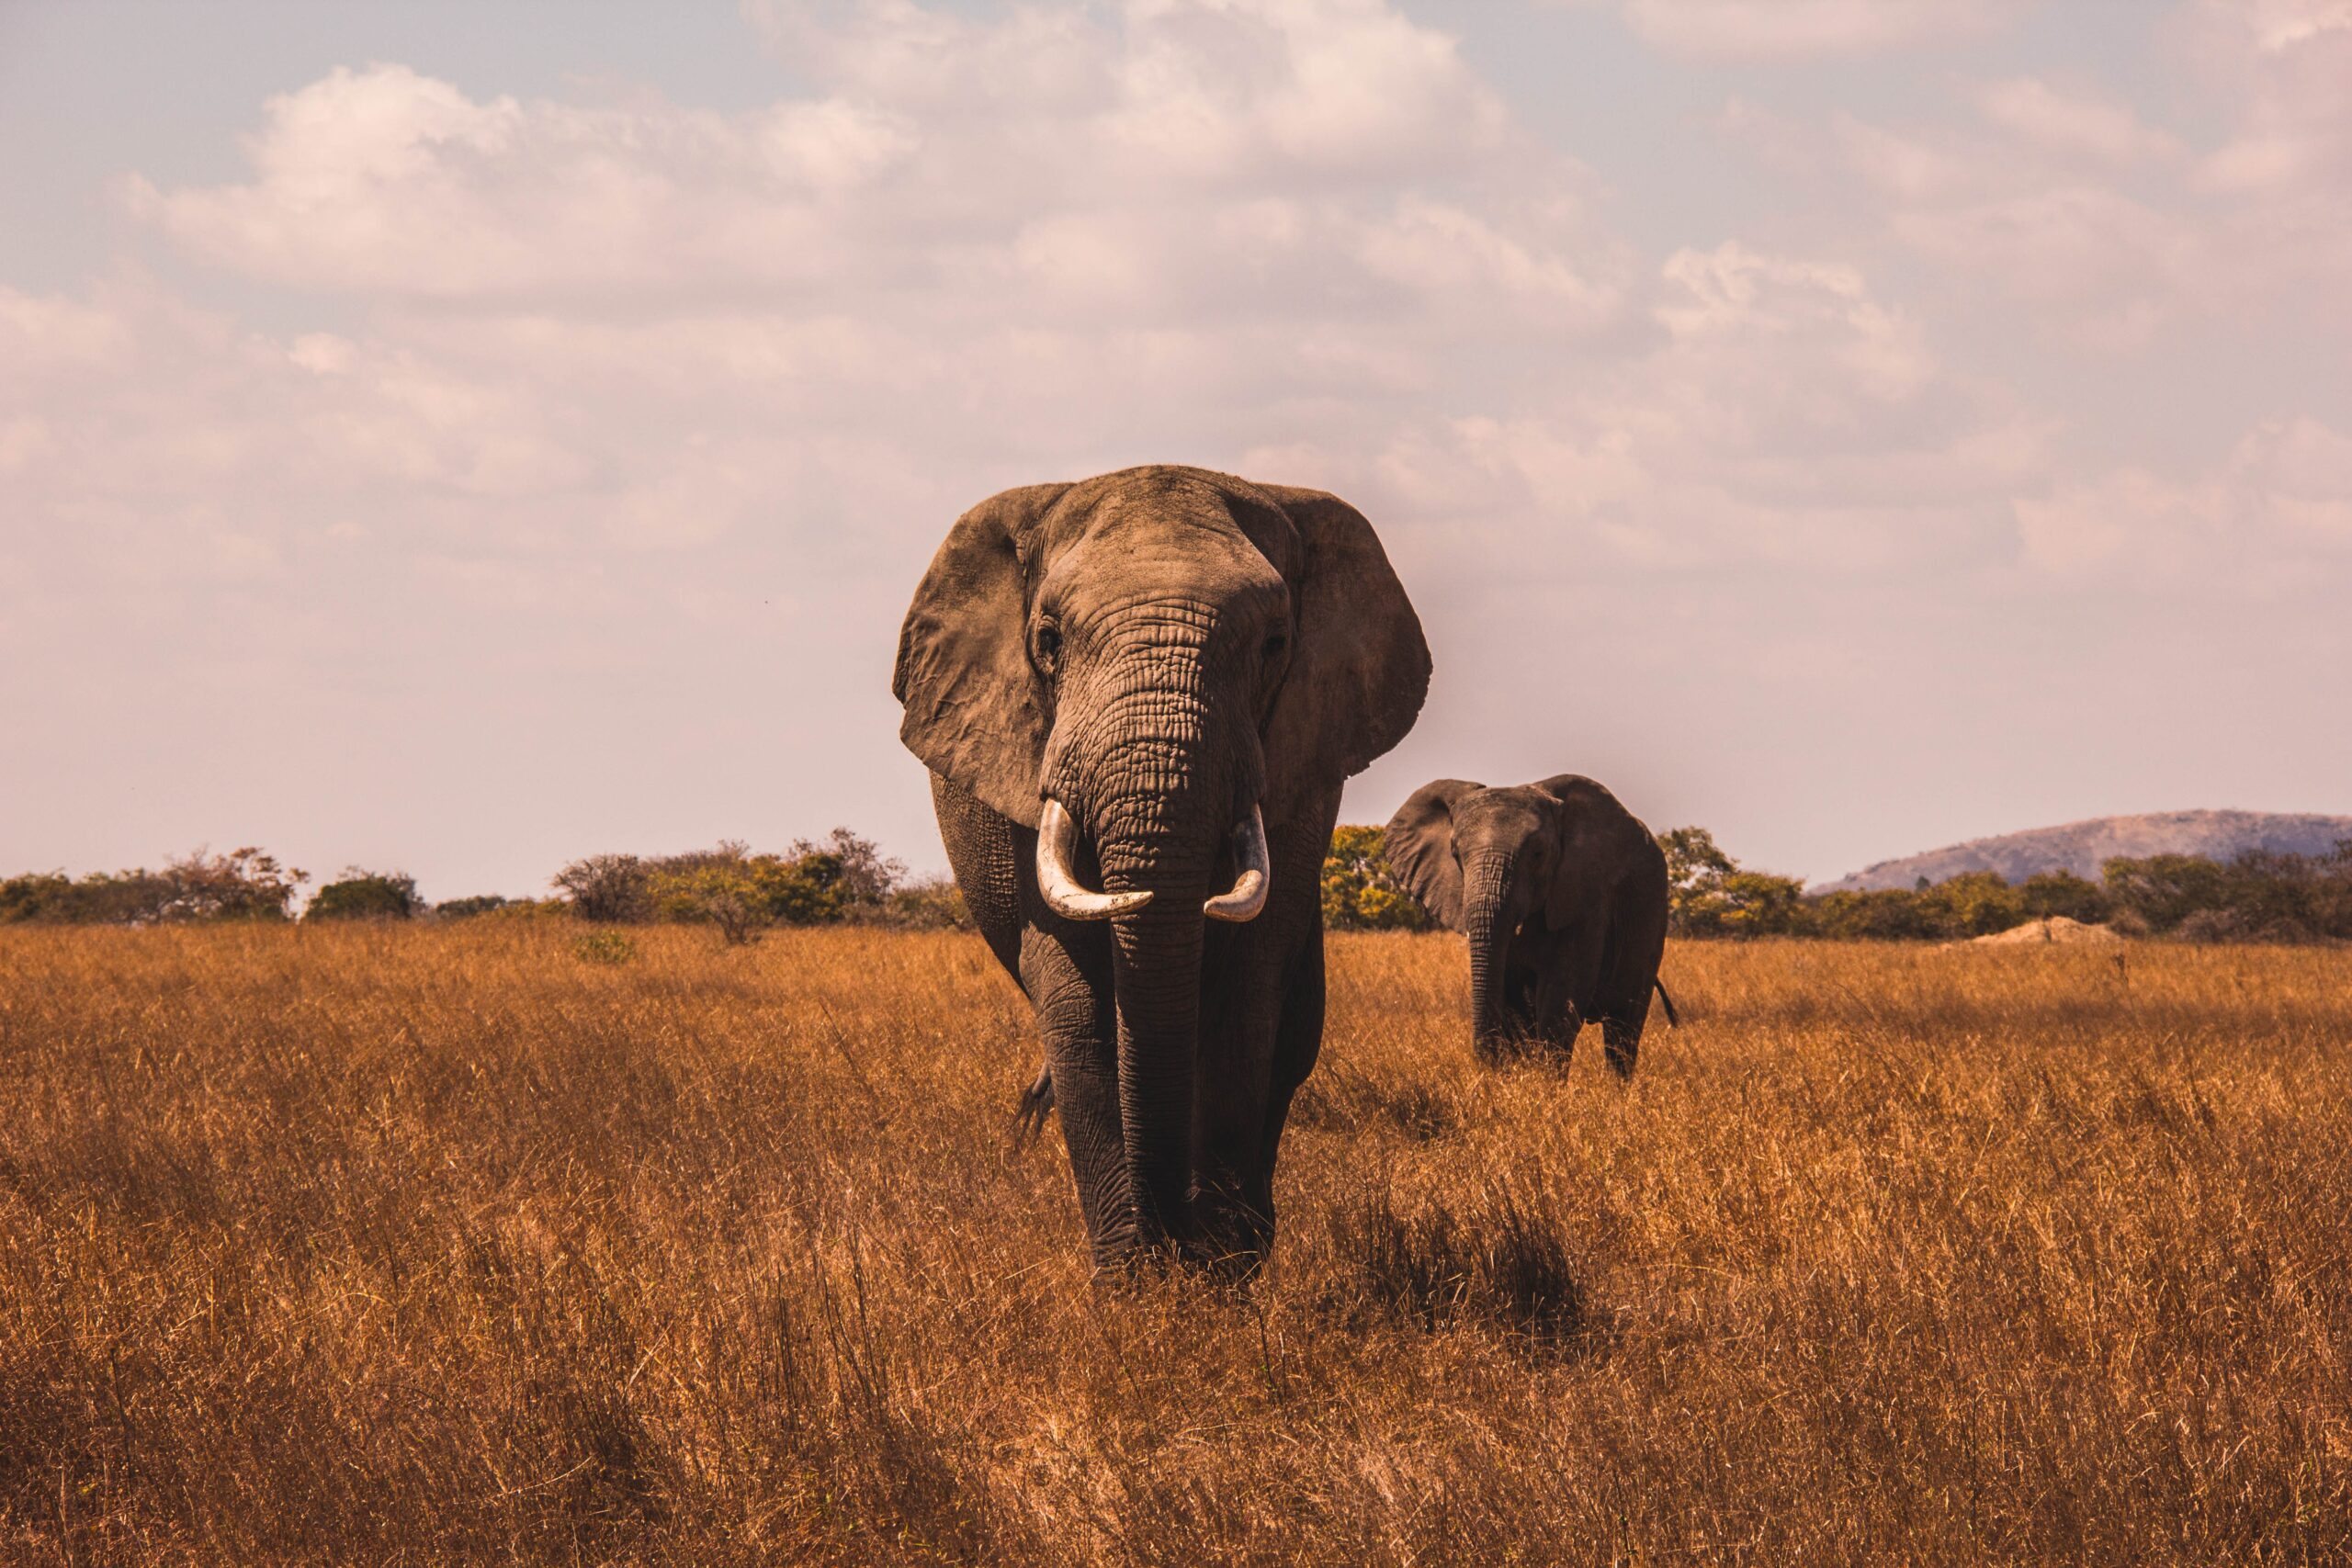 Safari-Wildlife- Nature-Images-Giant-Tusks-Africa-Wild-Mammal-Field-Savanna-Outdoors-Grassland